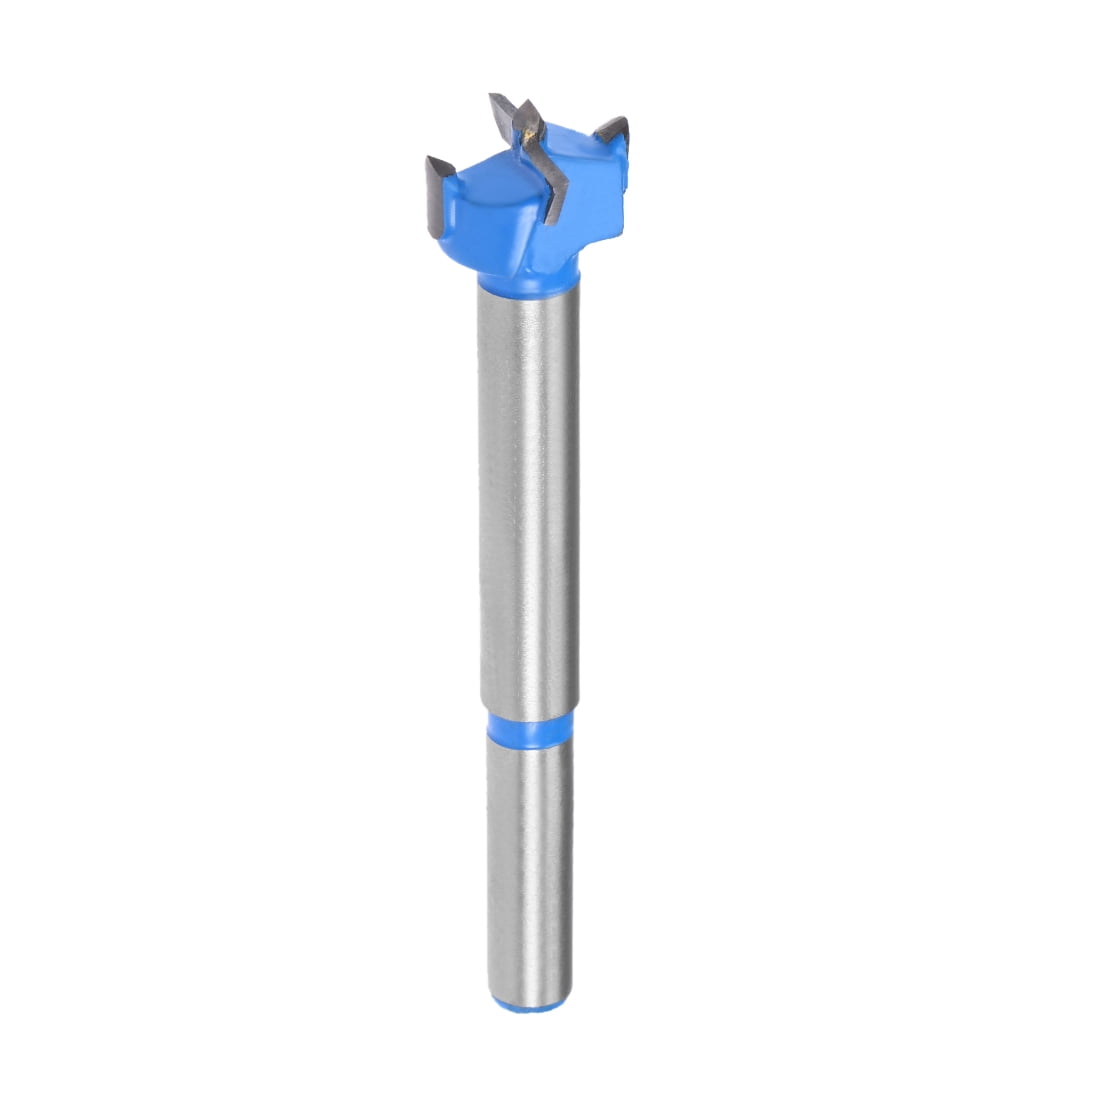 7mm Shank uxcell Hinge Boring Forstner Drill Bit Gray,Blue 16mm Diameter 